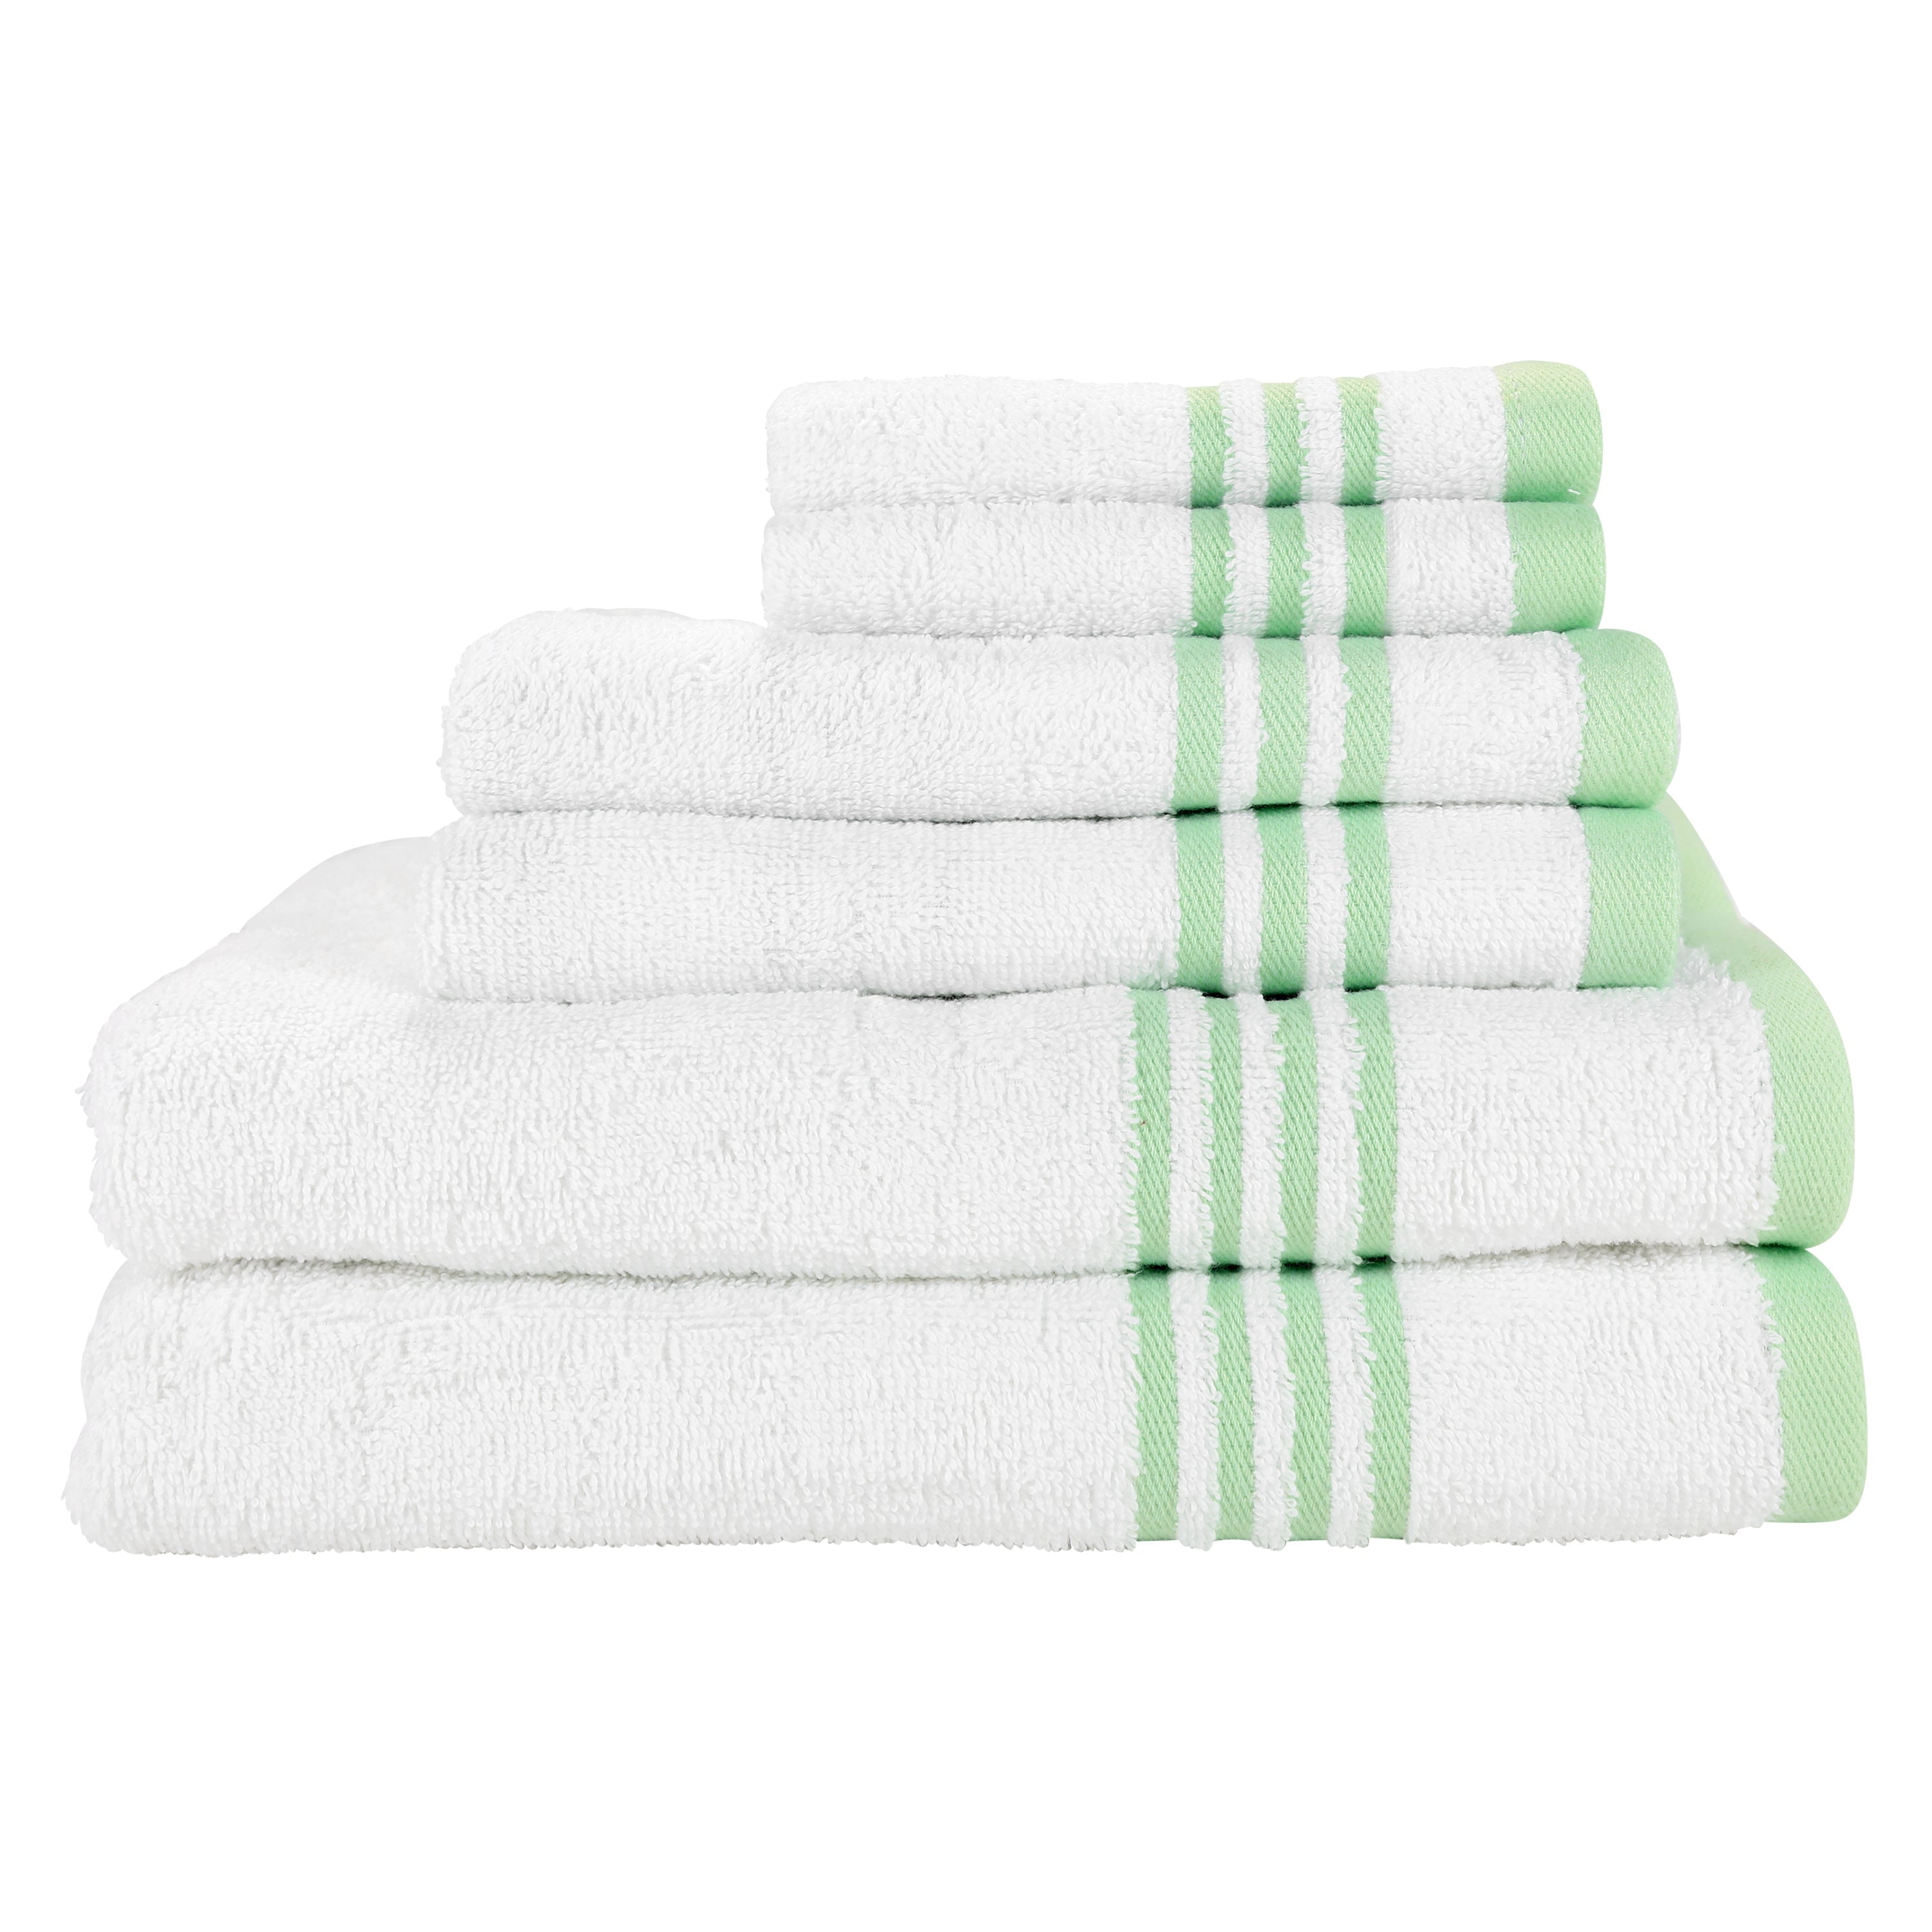 12 Pack Luxury Hotel Bath Towels 27x52 High Quality Soft Ring Spun